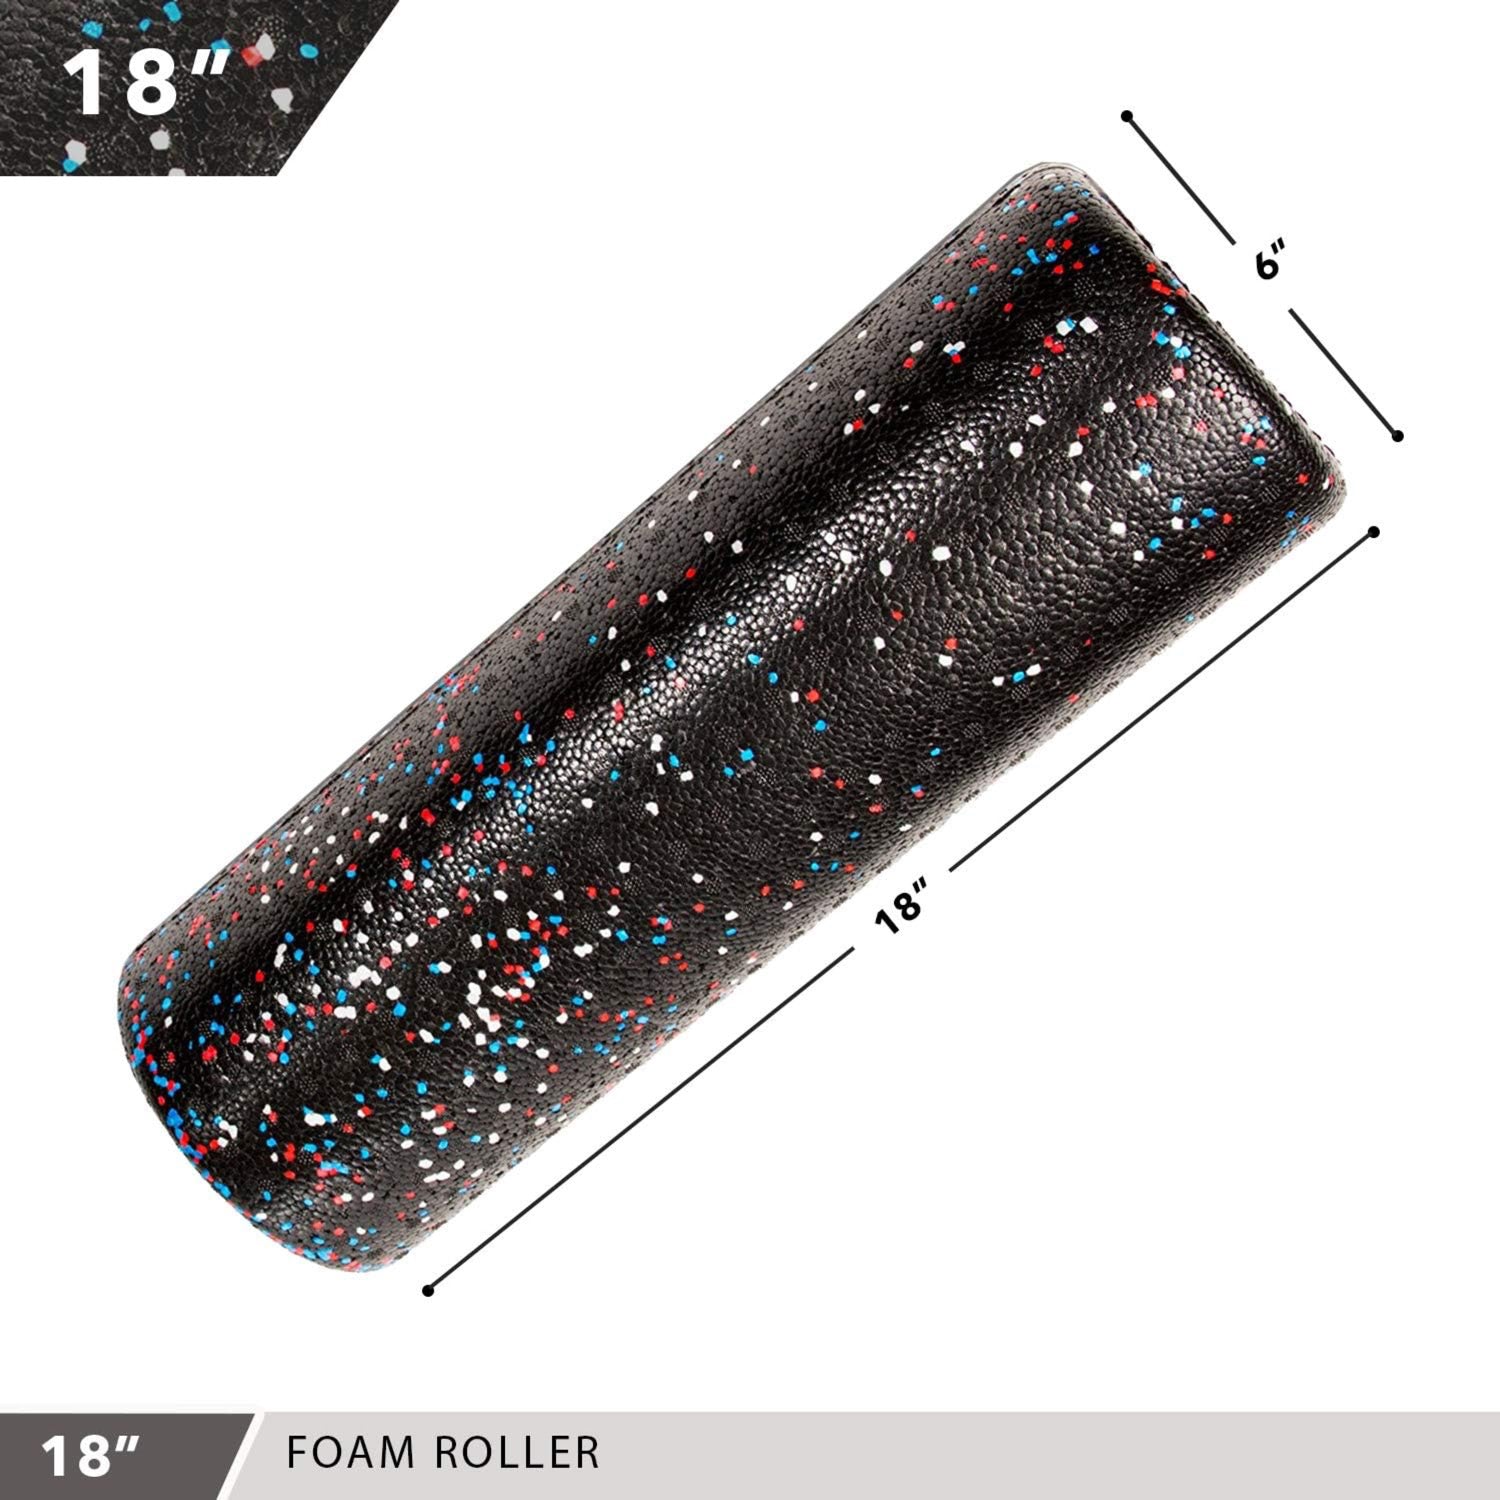 High-Density Foam Roller 18" Speckled USA Day 1 Fitness